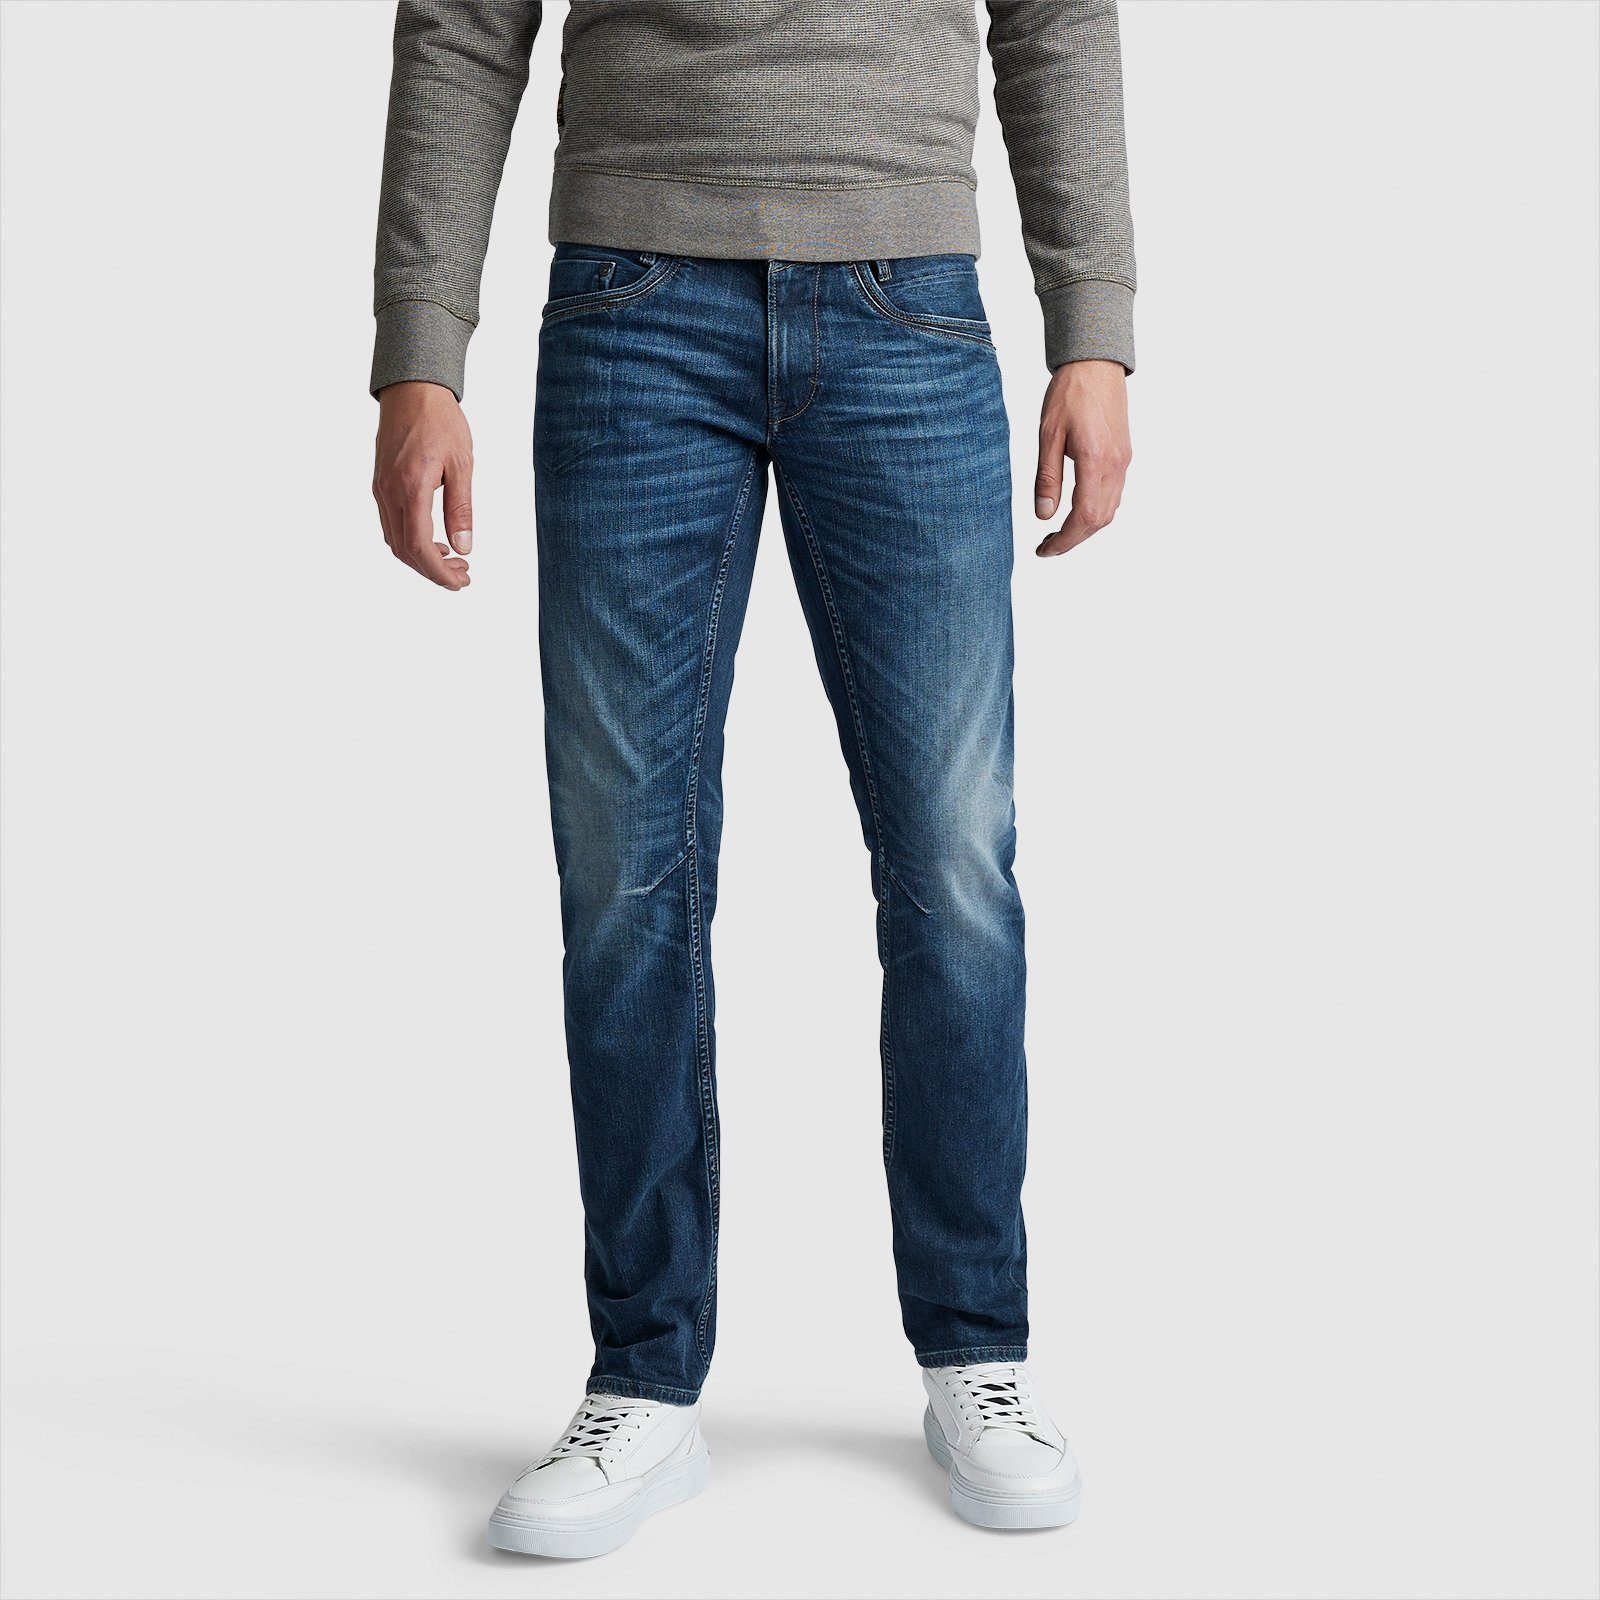 5-Pocket-Jeans SKYMASTER indigo dark PME PME LEGEND PTR650-DIW denim LEGEND